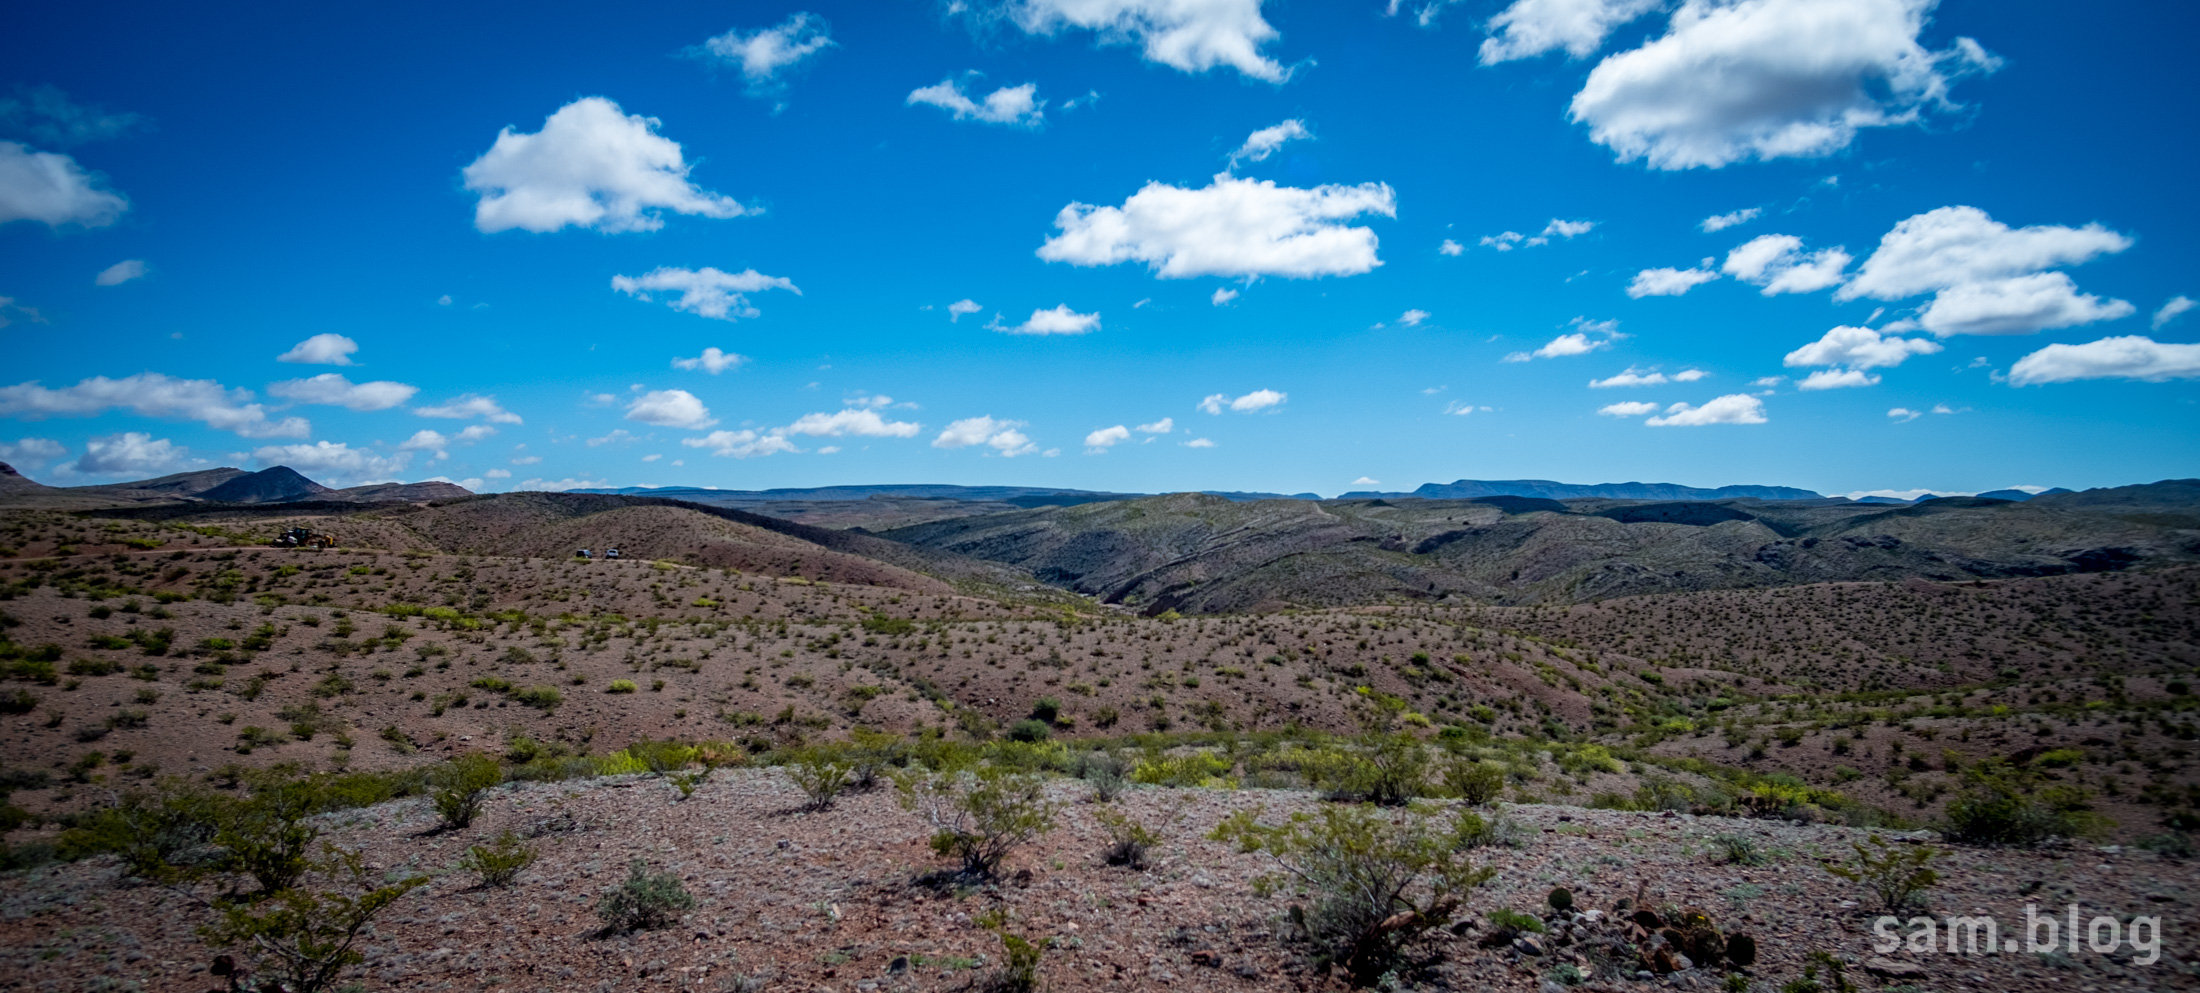 New Mexico Desert in Spring